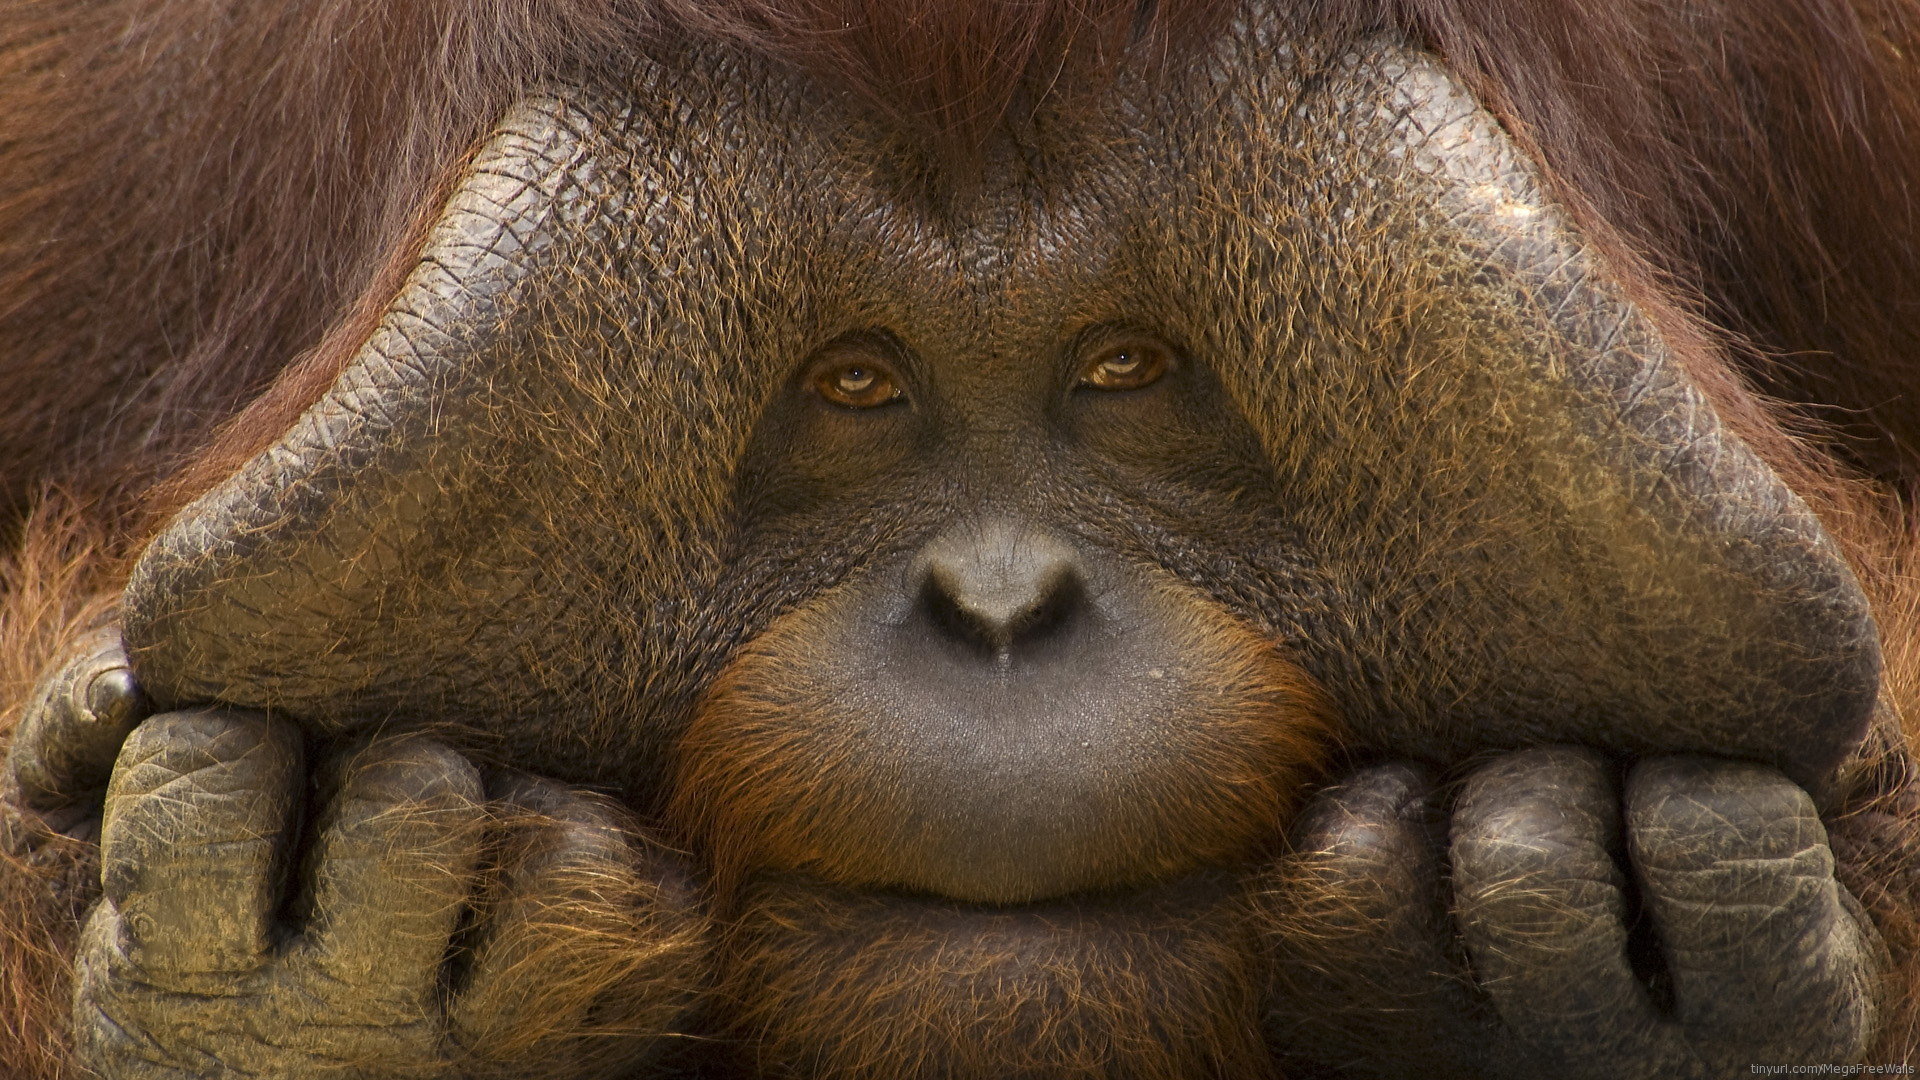 Download hd 1080p Orangutan computer wallpaper ID:70049 for free